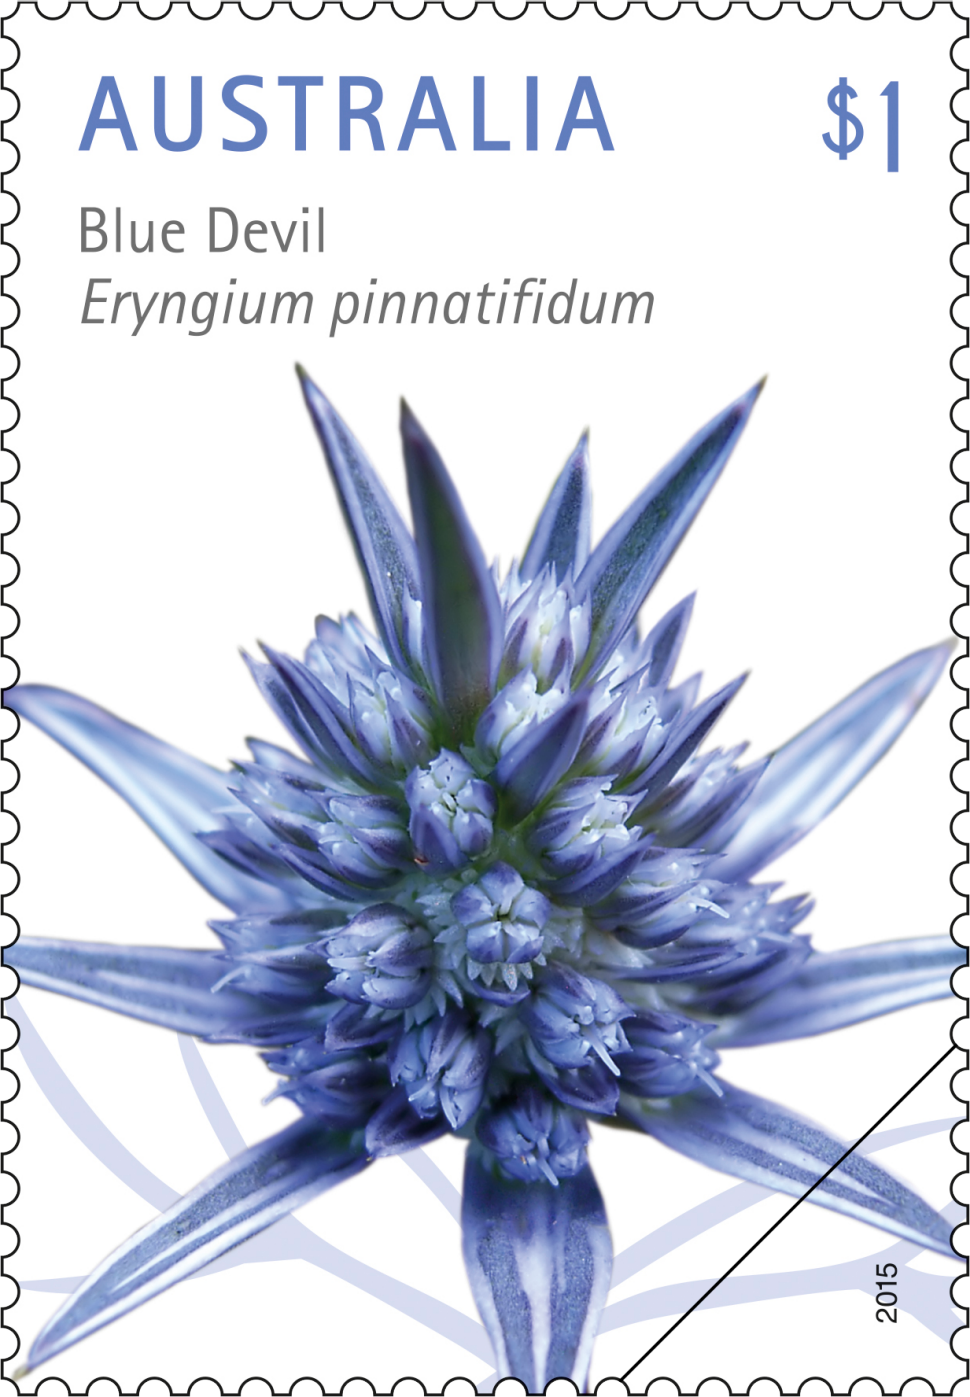 $1 - Blue Devil, Eryngium pinnatifidum